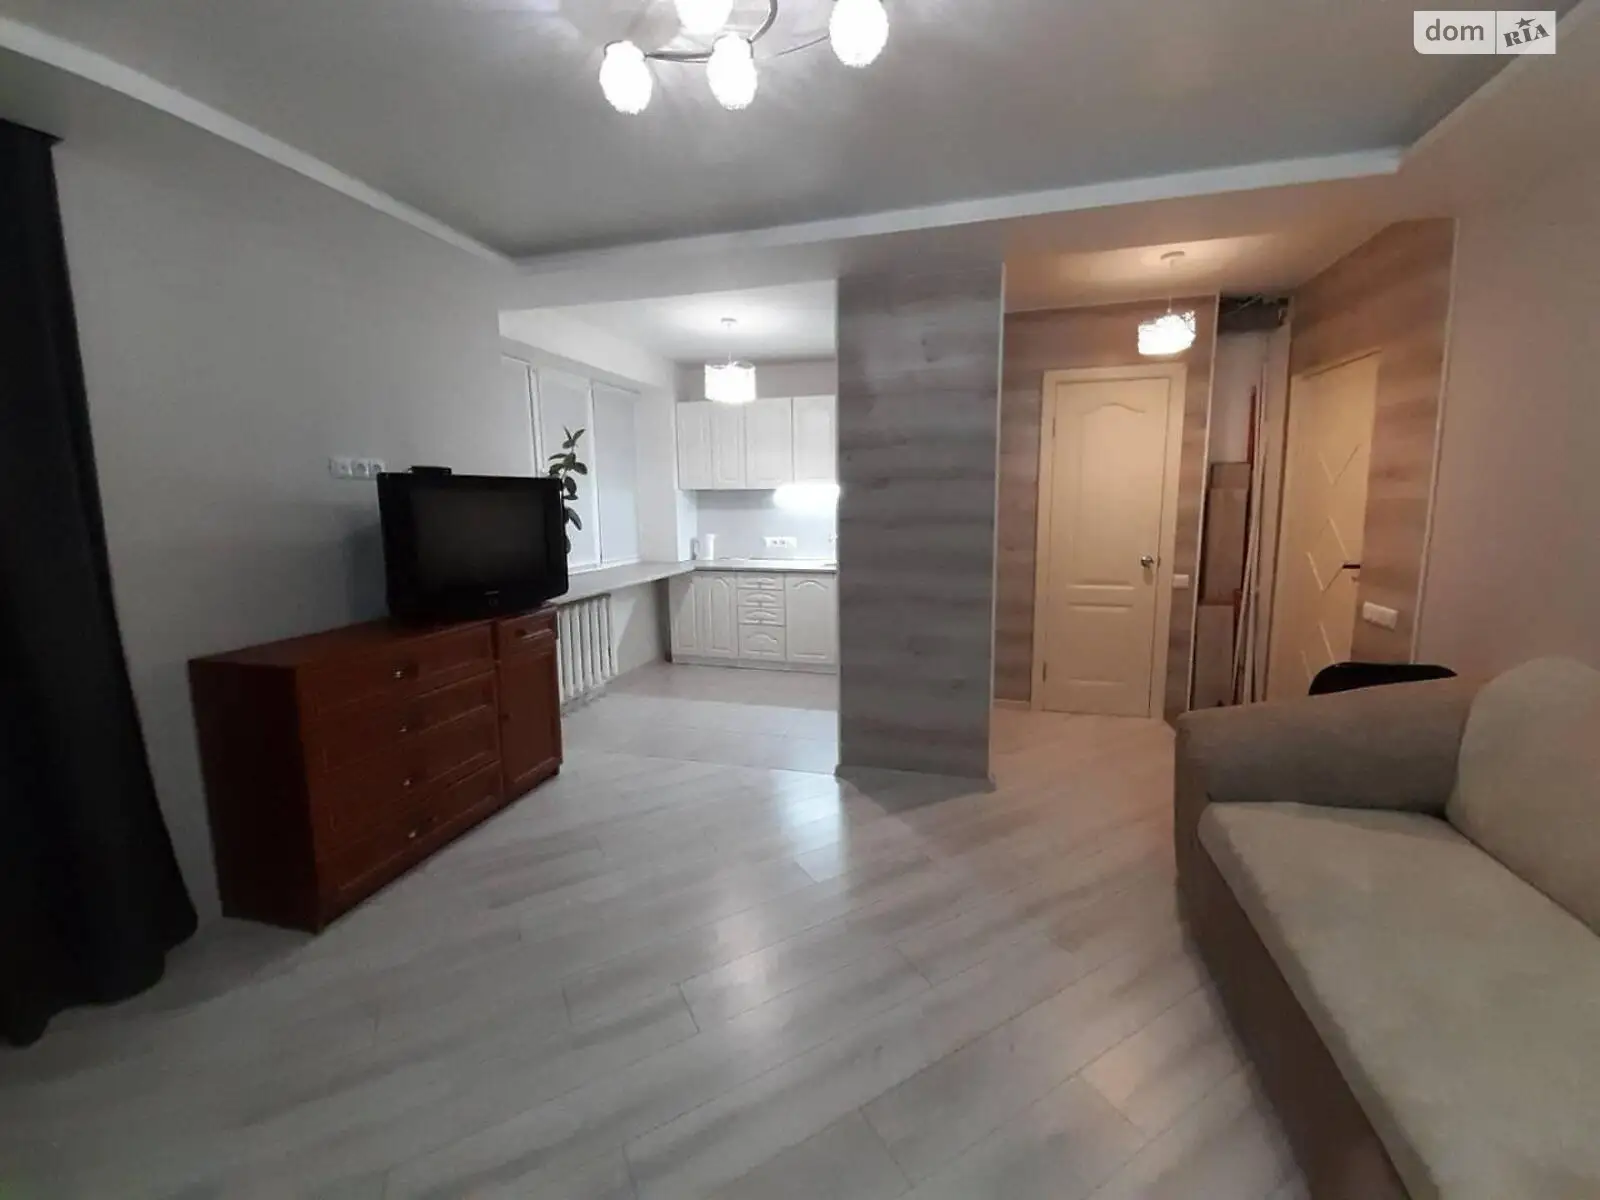 Продается комната 23 кв. м в Одессе, цена: 20000 $ - фото 1